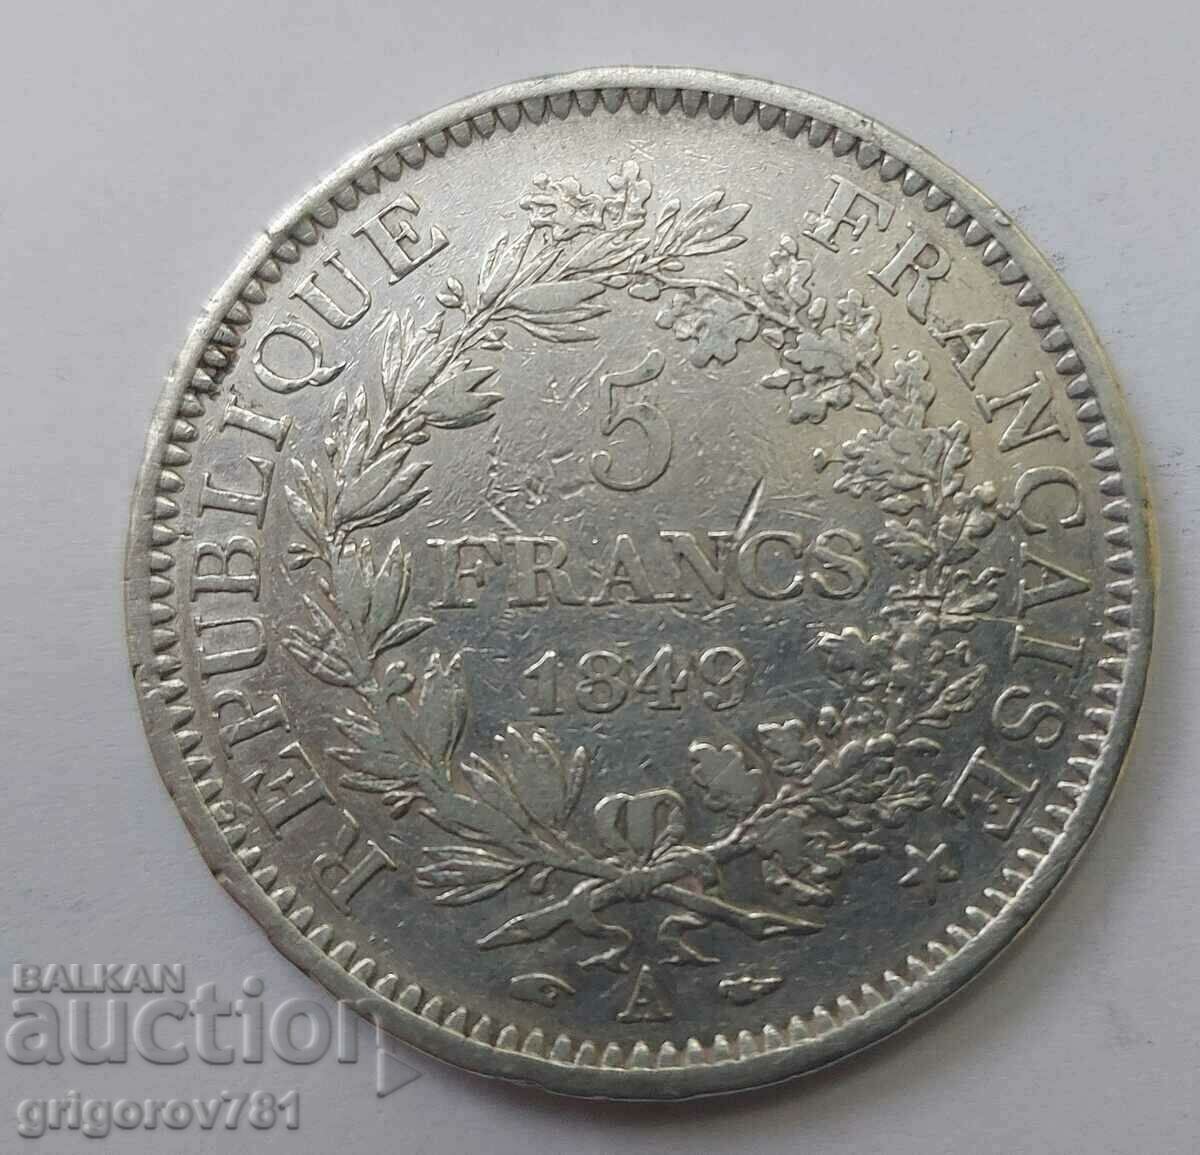 5 Francs Silver France 1849 A - Silver Coin #53